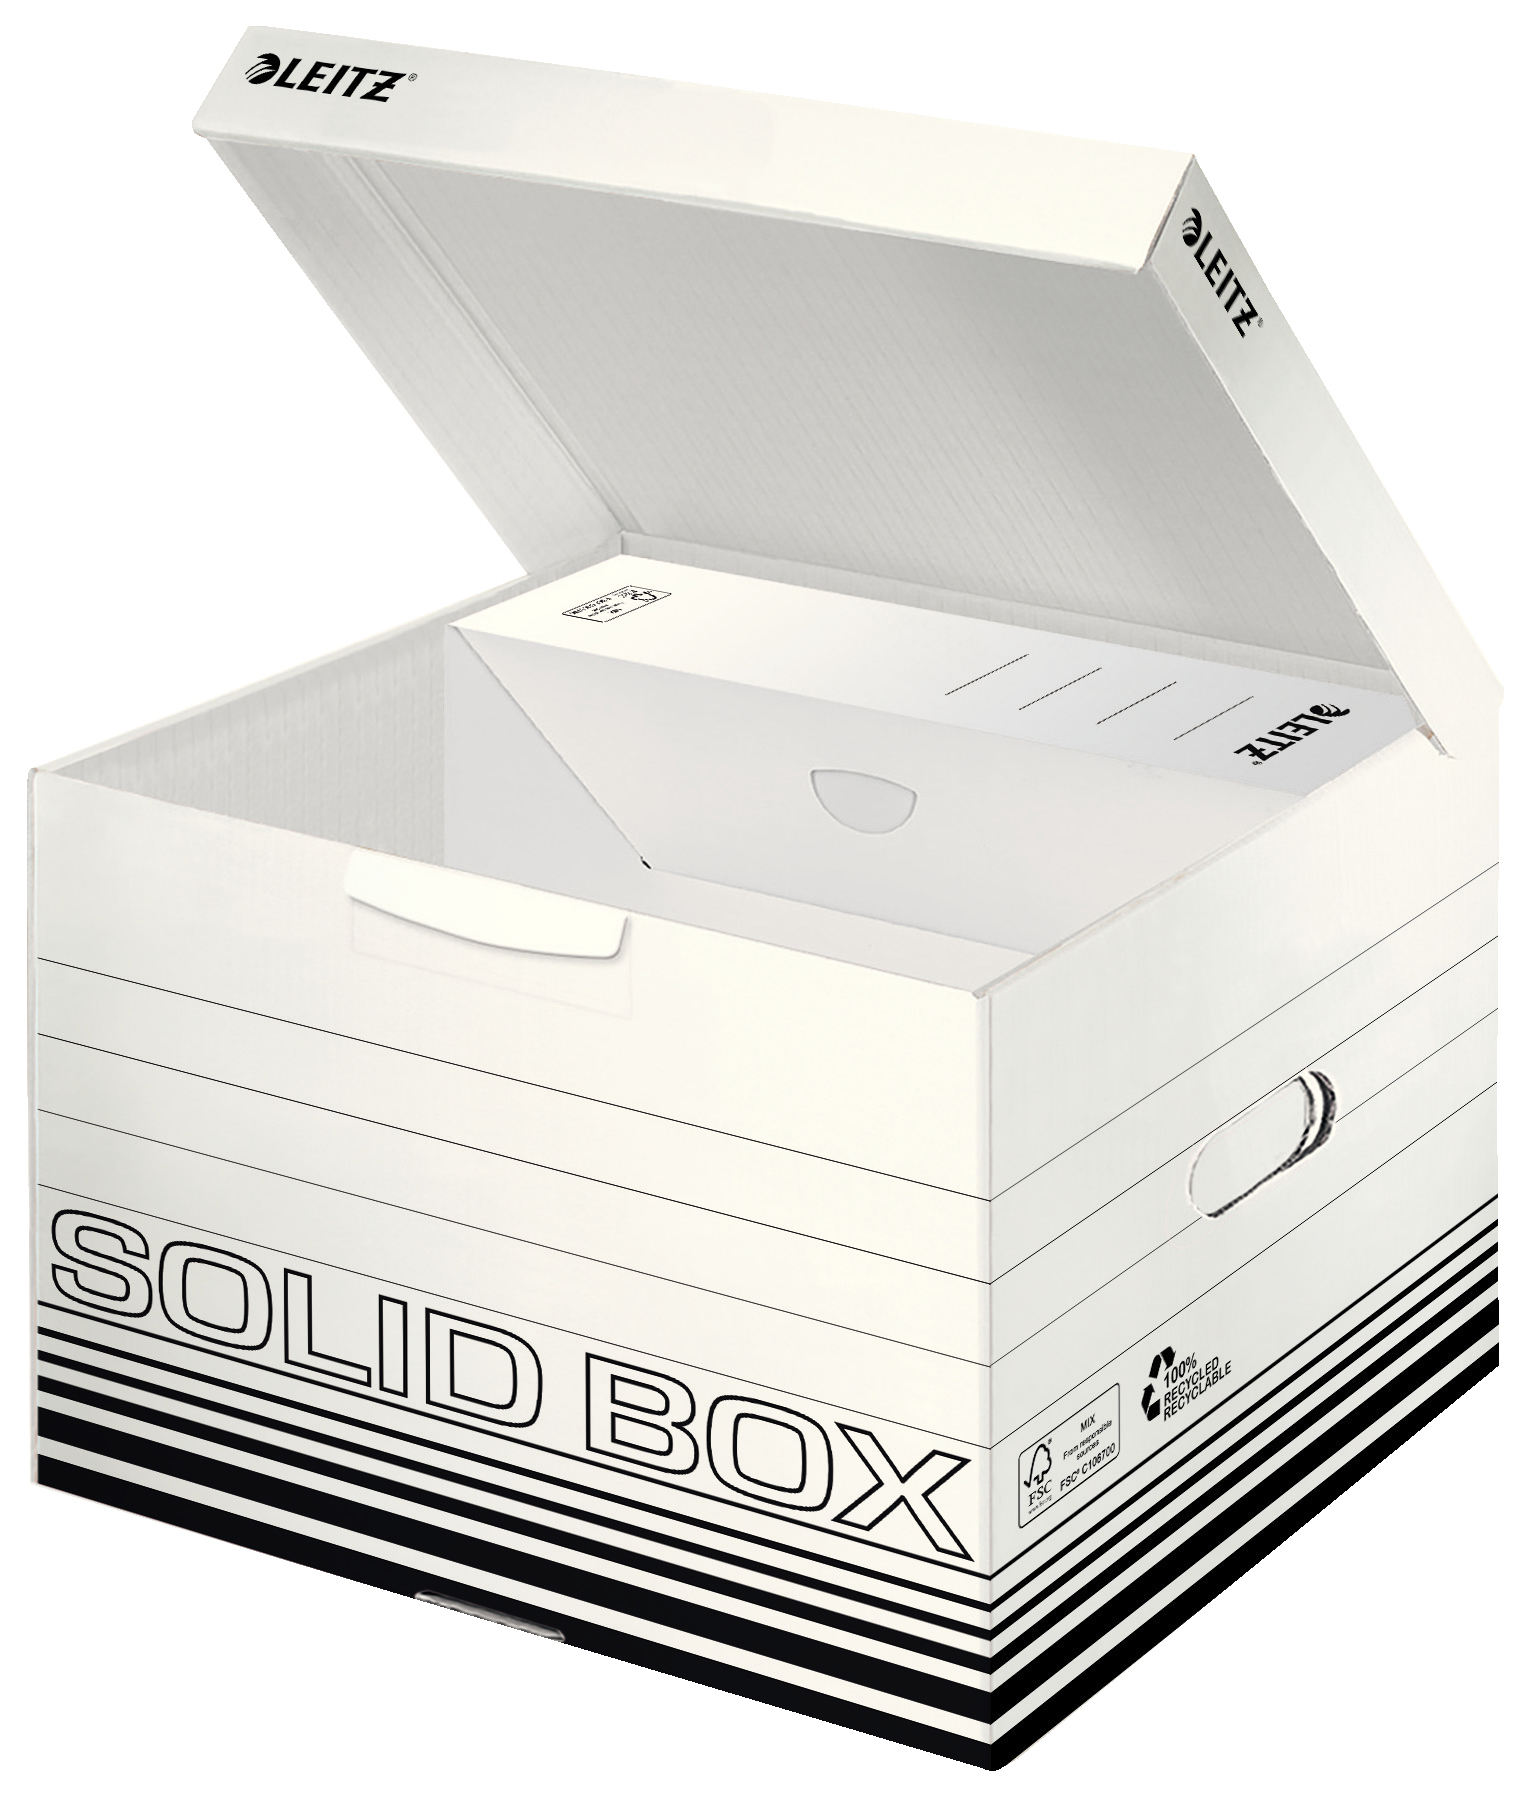 LEITZ Solid Box M 6118-00-01 blanc 325x270x360mm